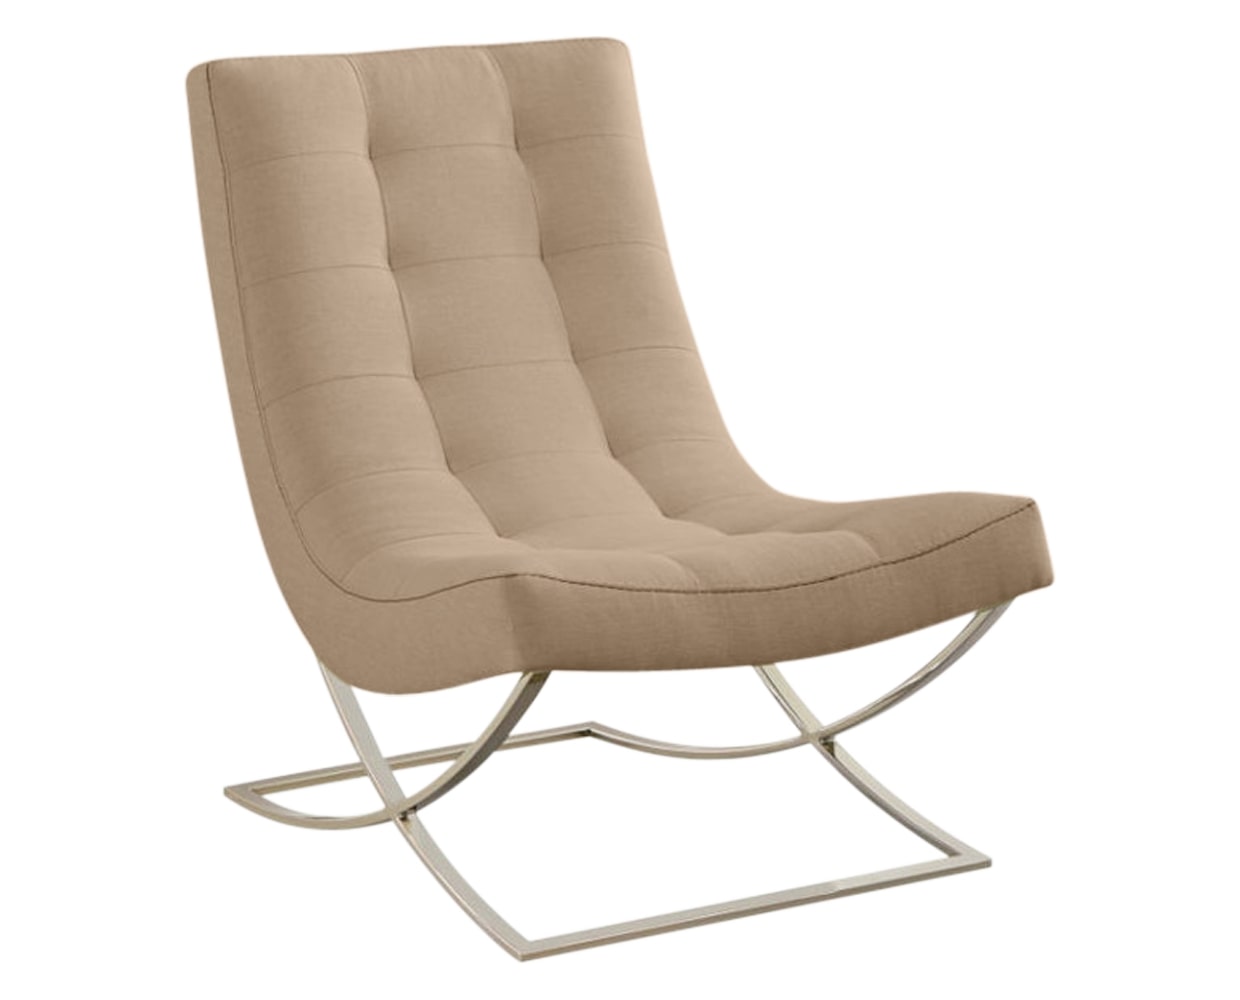 Drake Fabric Latte | Lee Industries 1549 Chair | Valley Ridge Furniture